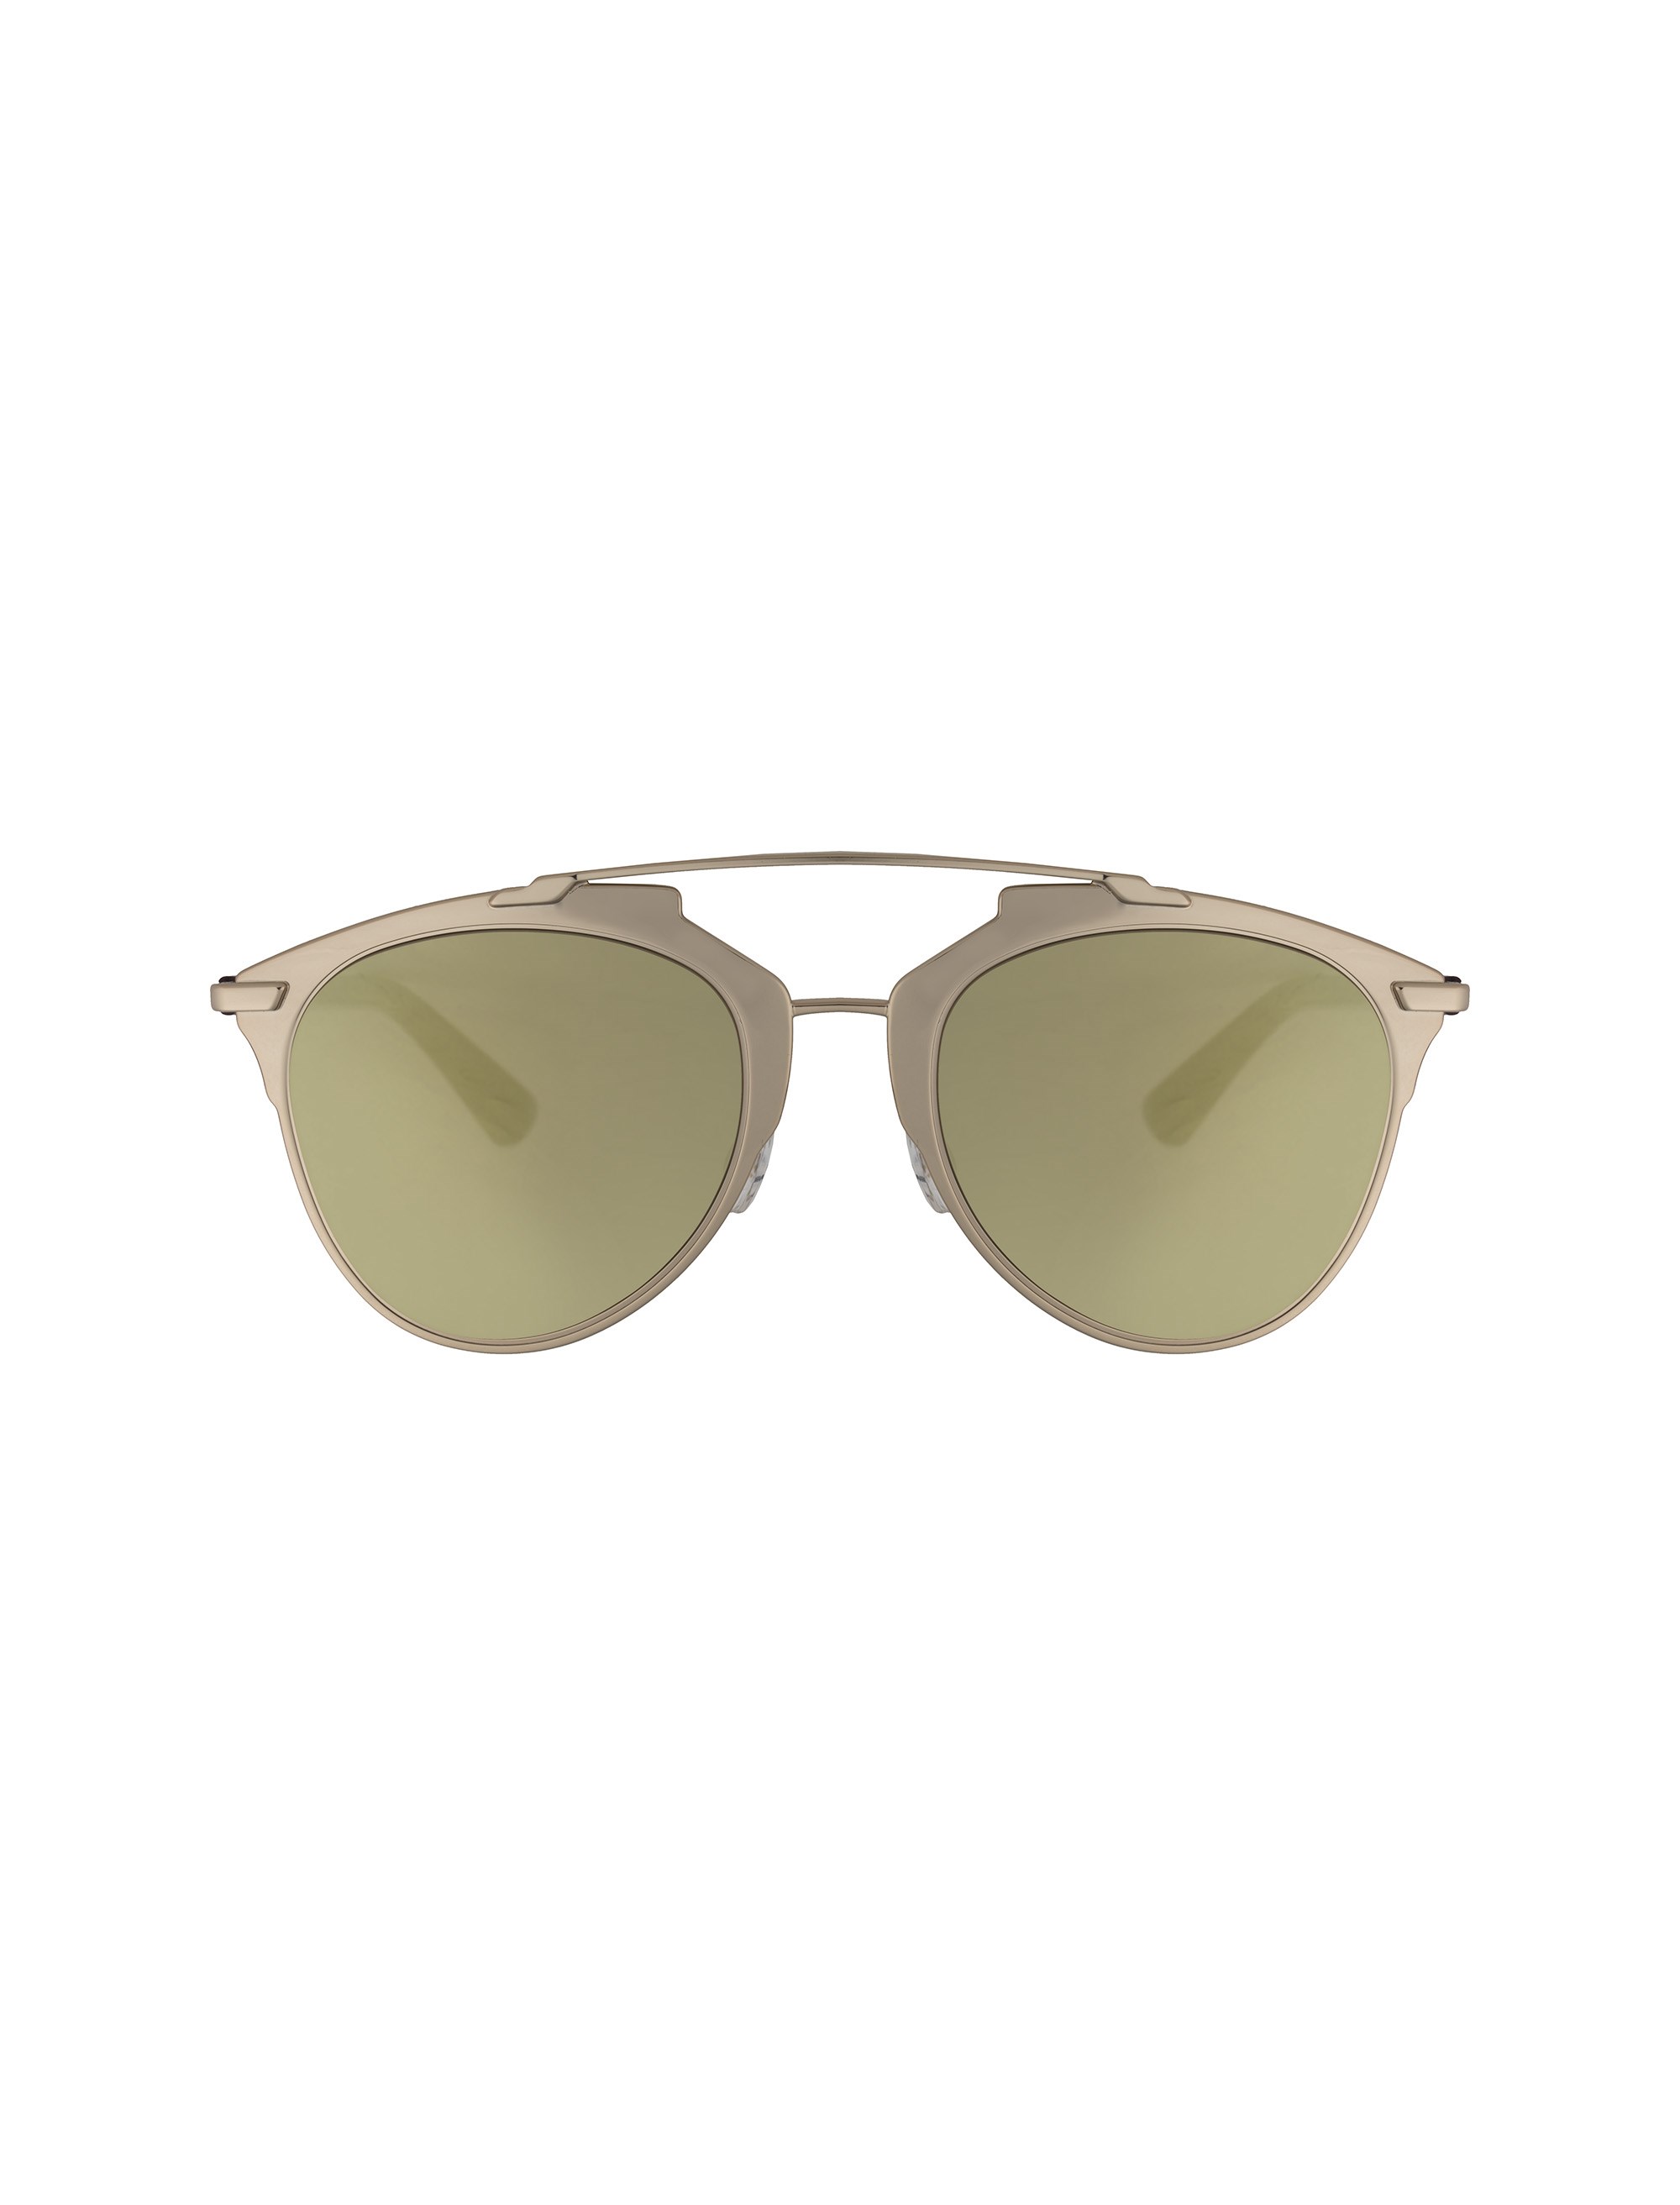 عینک آفتابی خلبانی زنانه - دیور - طلايي و بادمجاني - 1